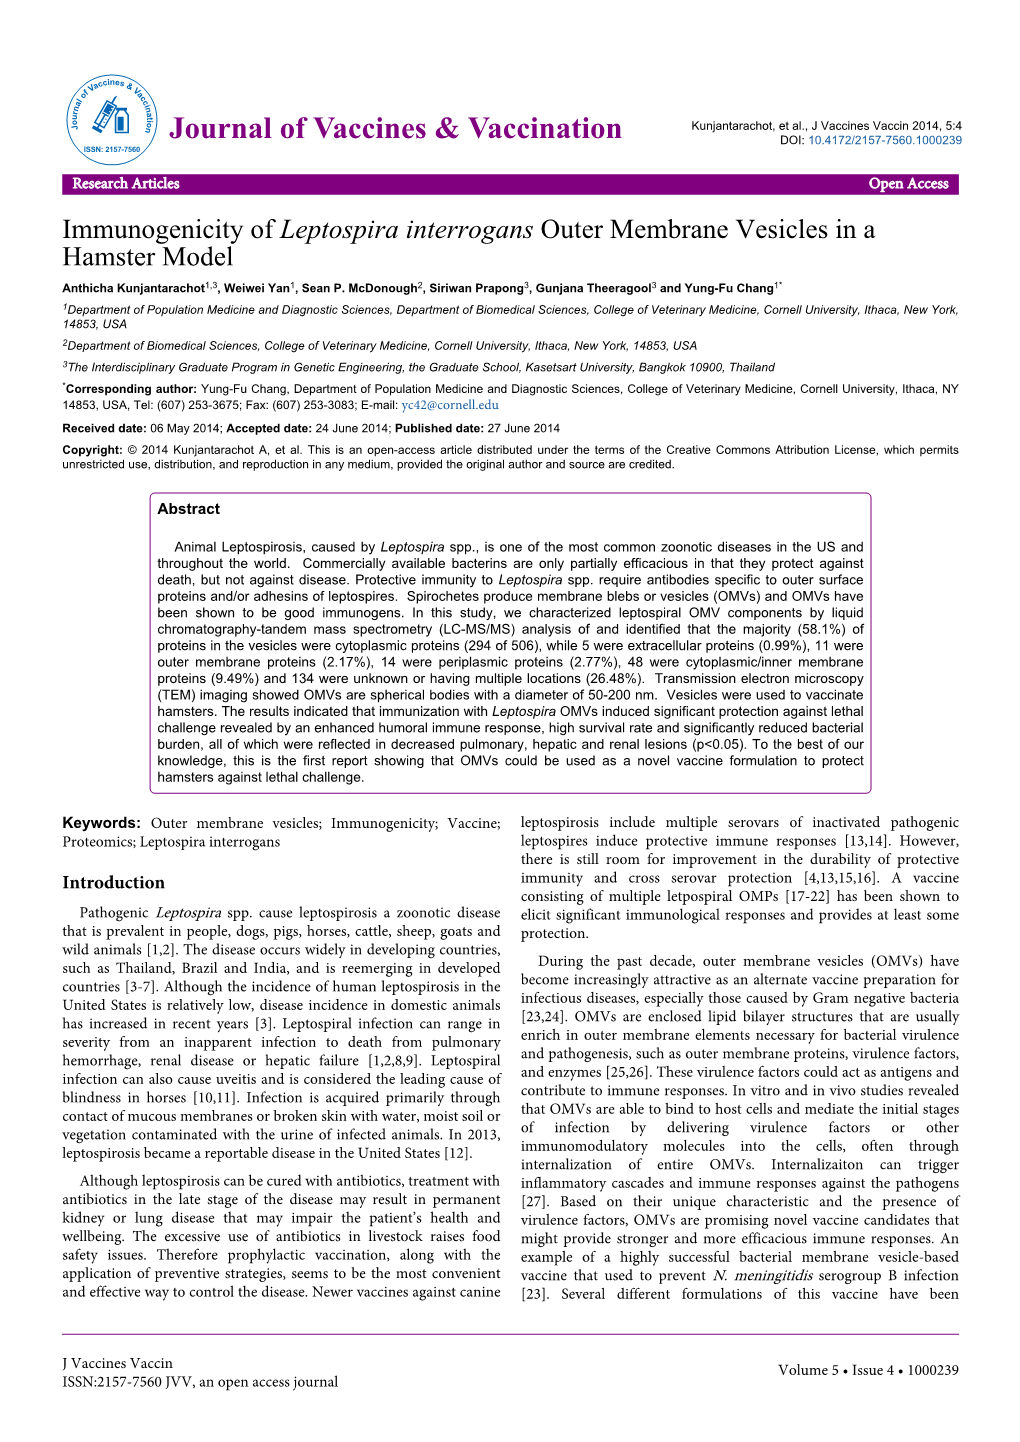 Immunogenicity of Leptospira Interrogans Outer Membrane Vesicles in a Hamster Model Anthicha Kunjantarachot1,3, Weiwei Yan1, Sean P